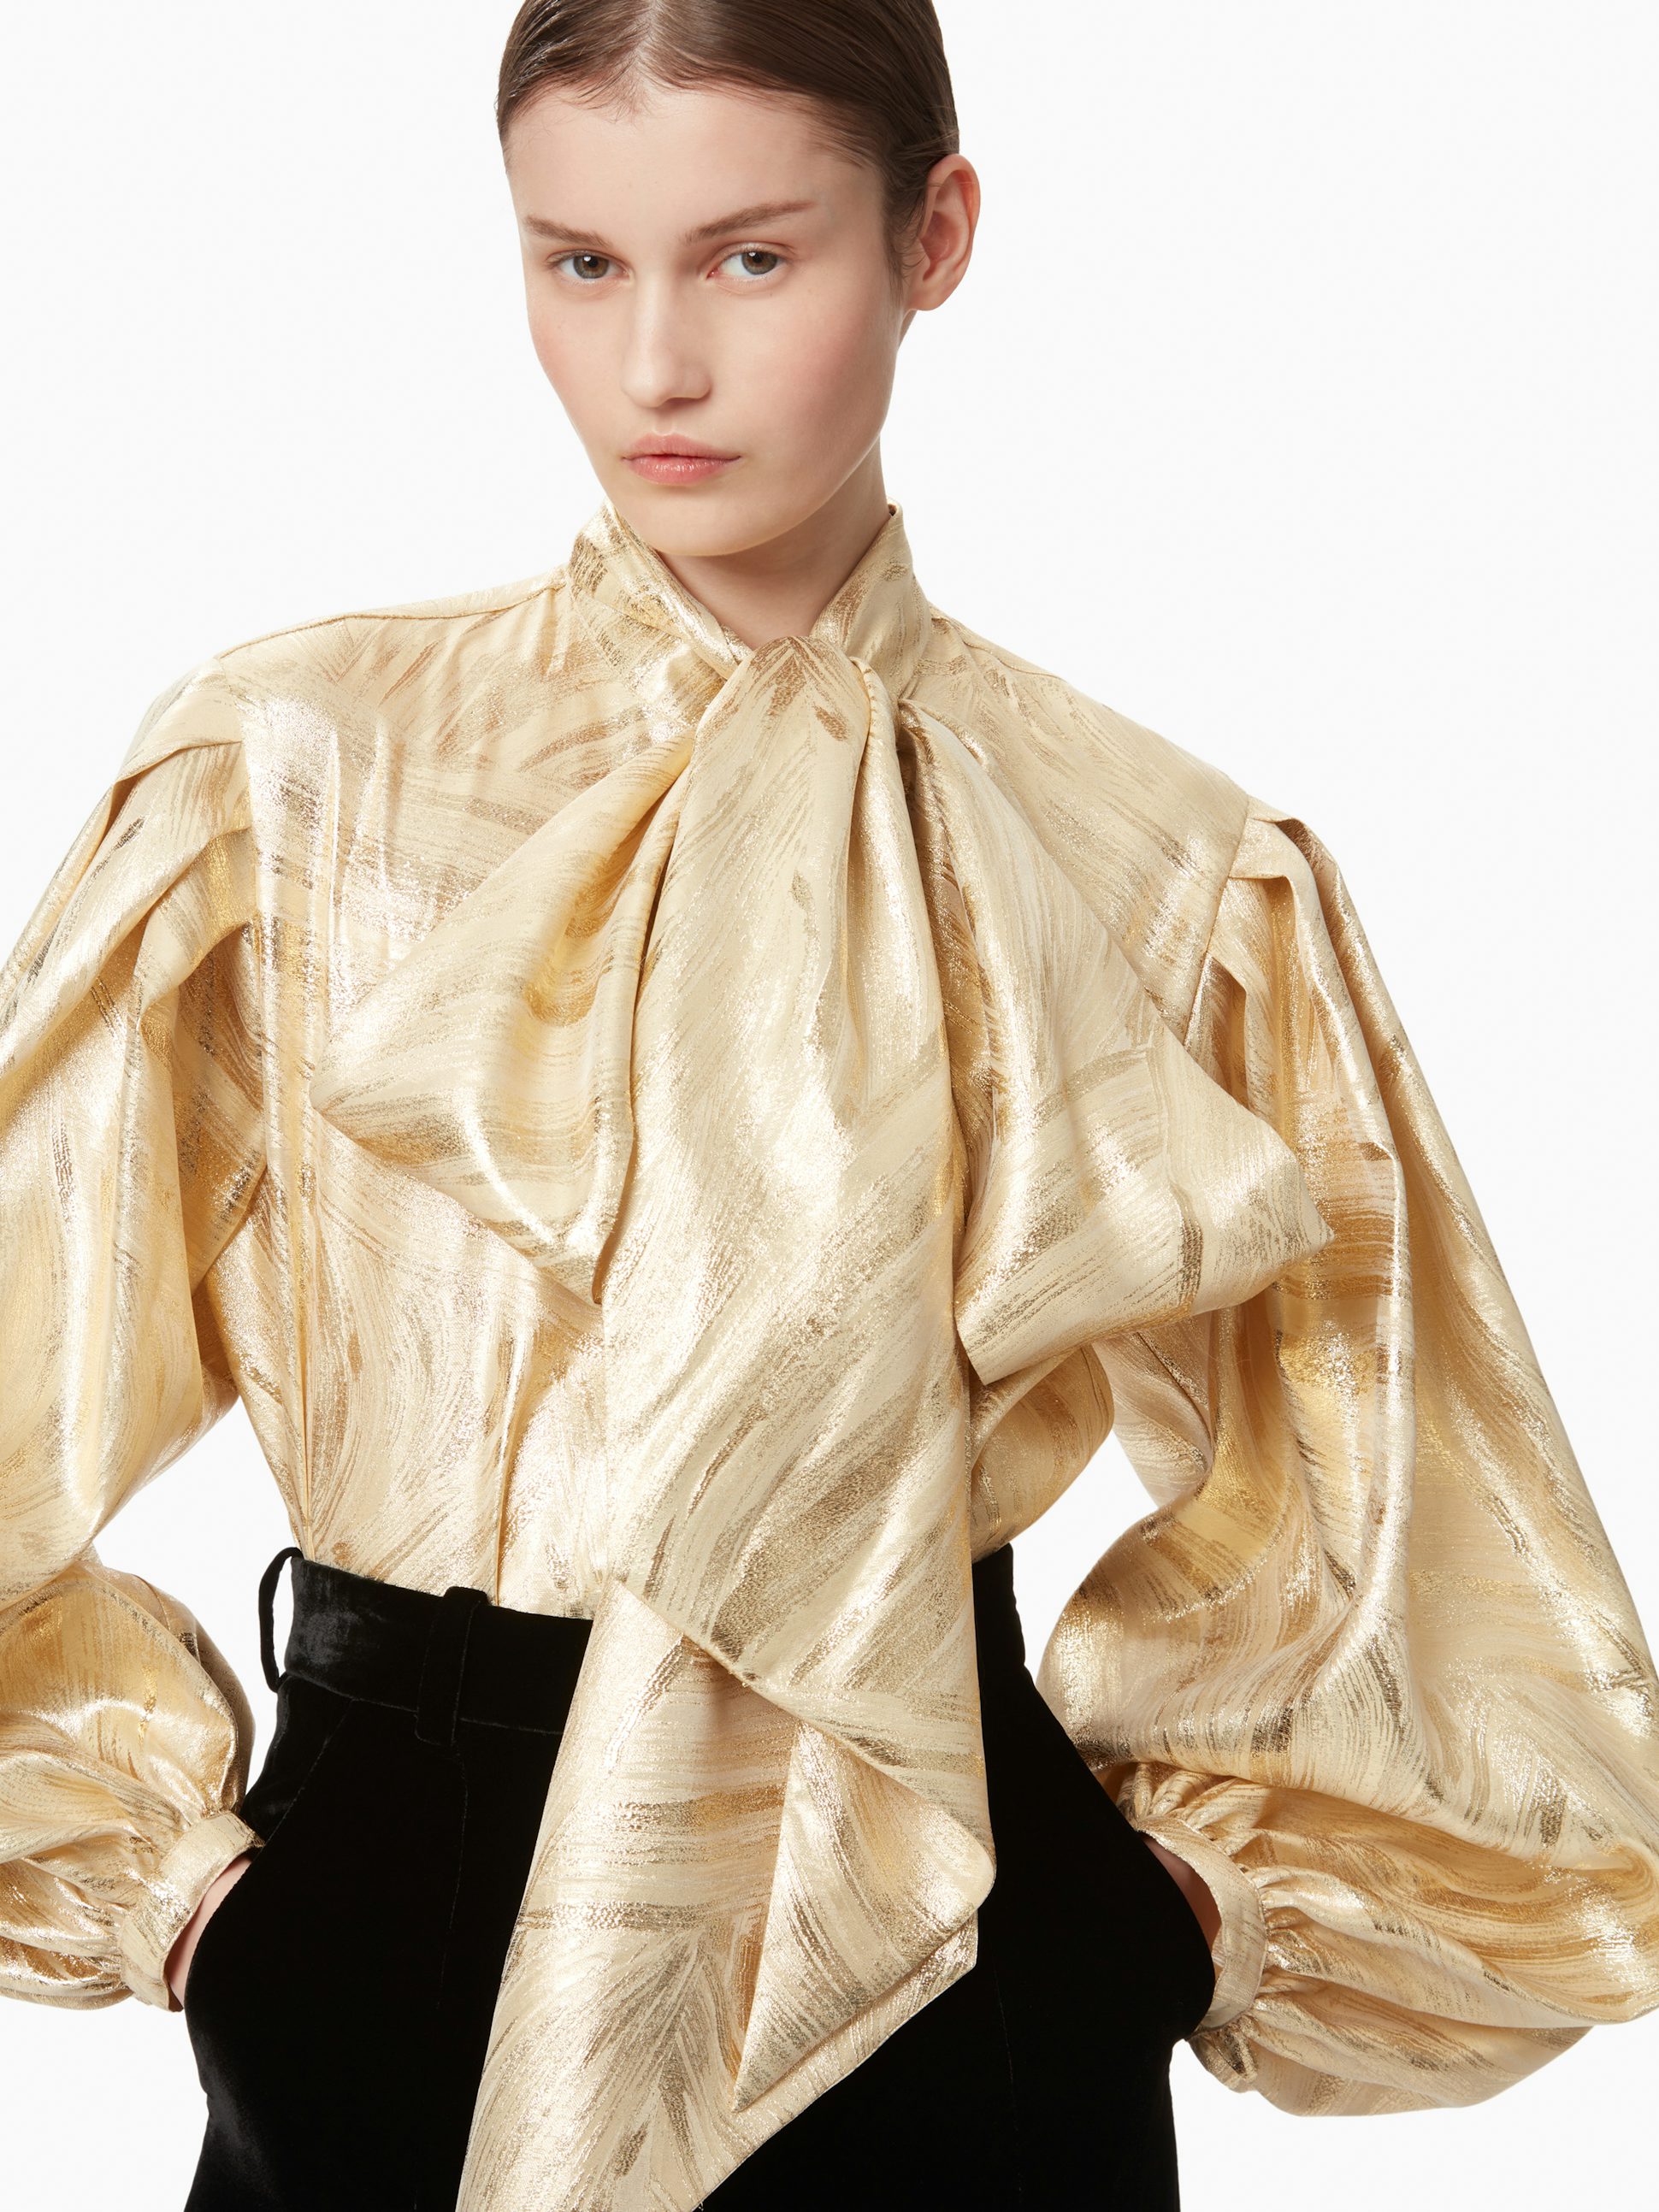 Pussy-bow shirt in gold - Nina Ricci